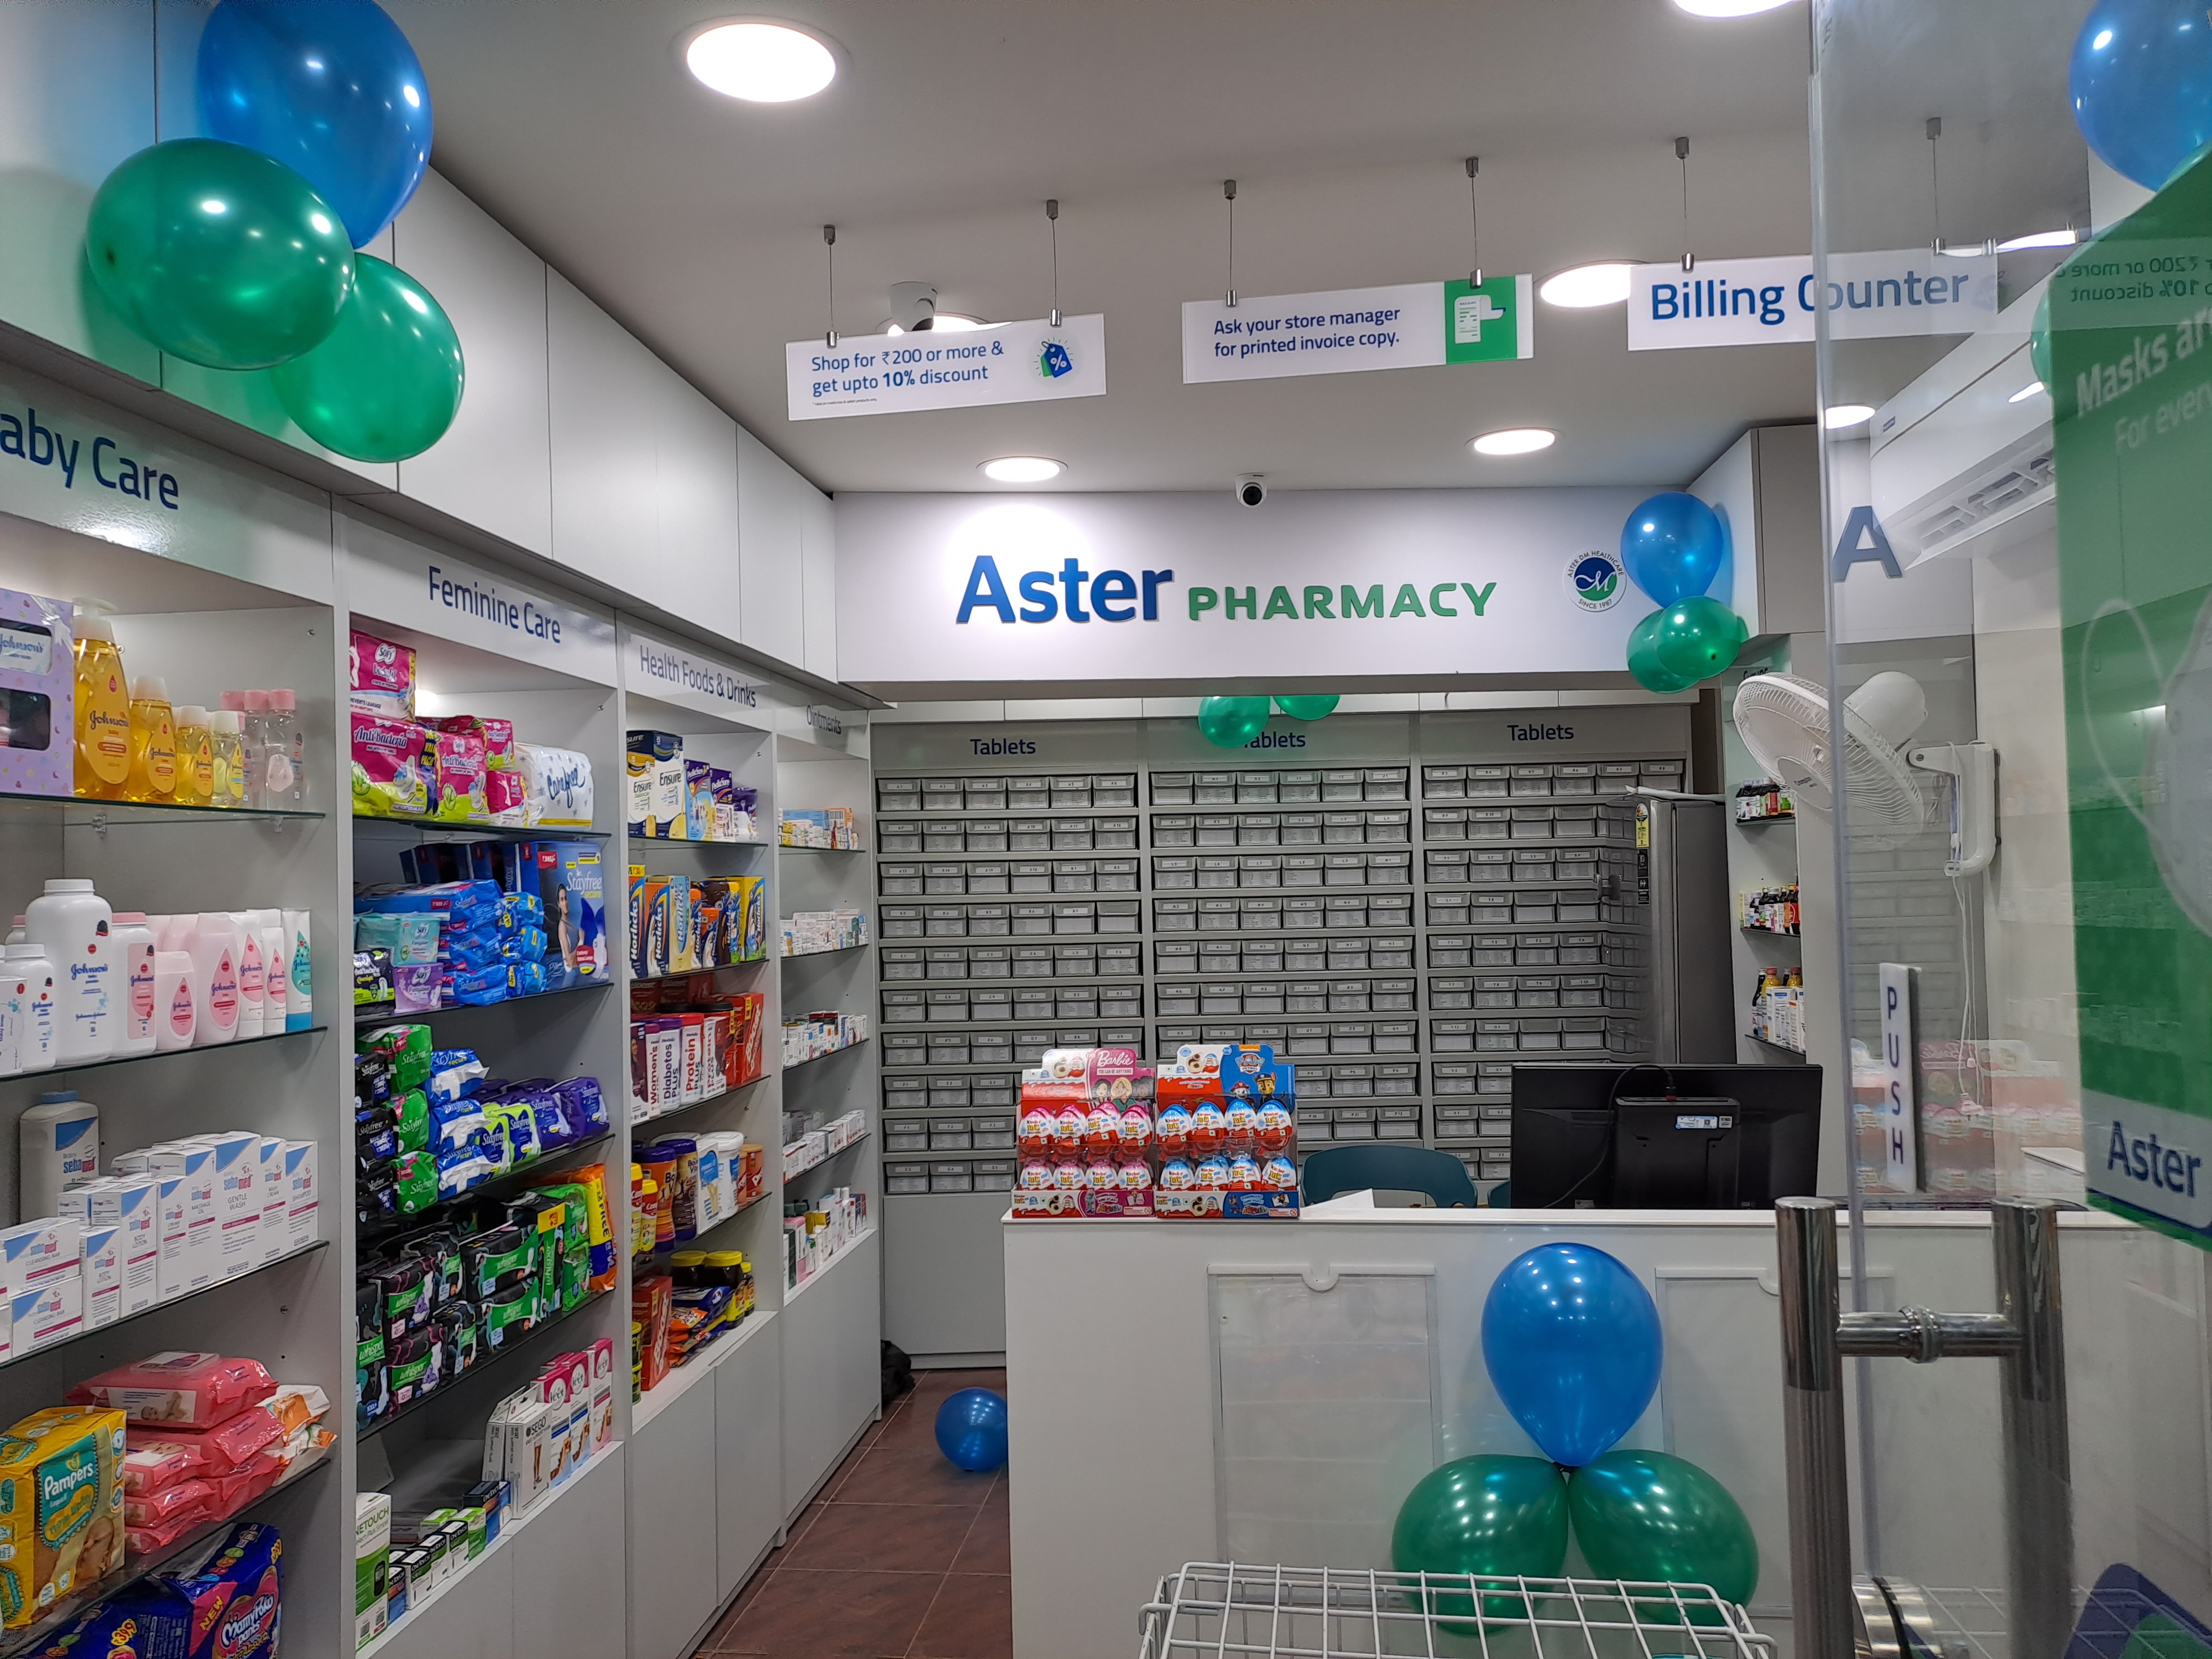 Aster Pharmacy in Velliparamba, Calicut